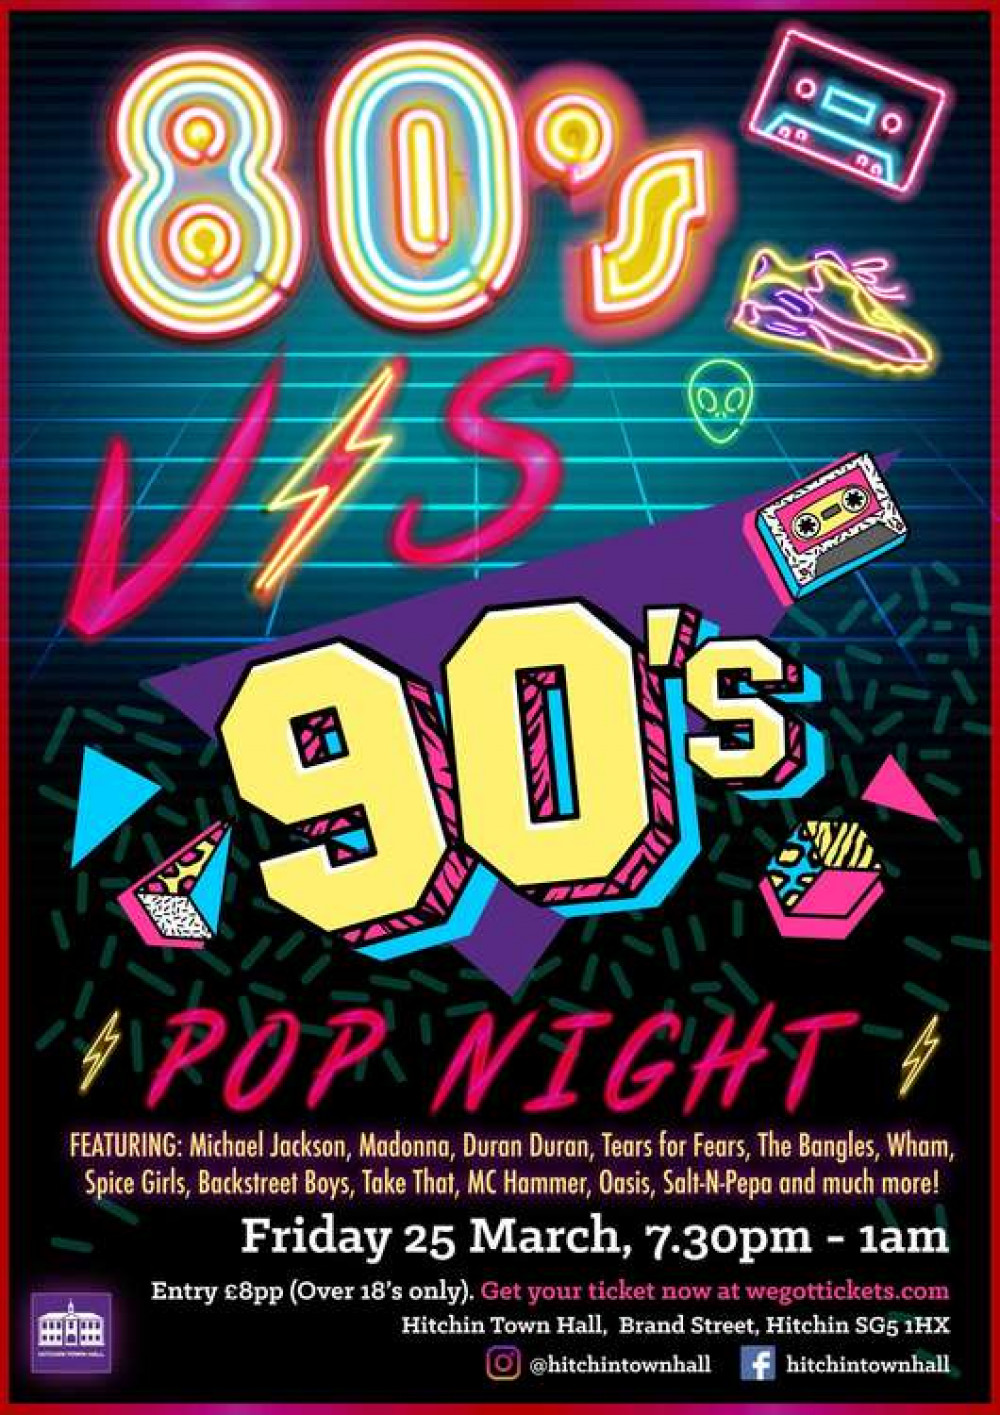 80s Vs 90s Pop Night Uncategorised News Hitchin Nub News